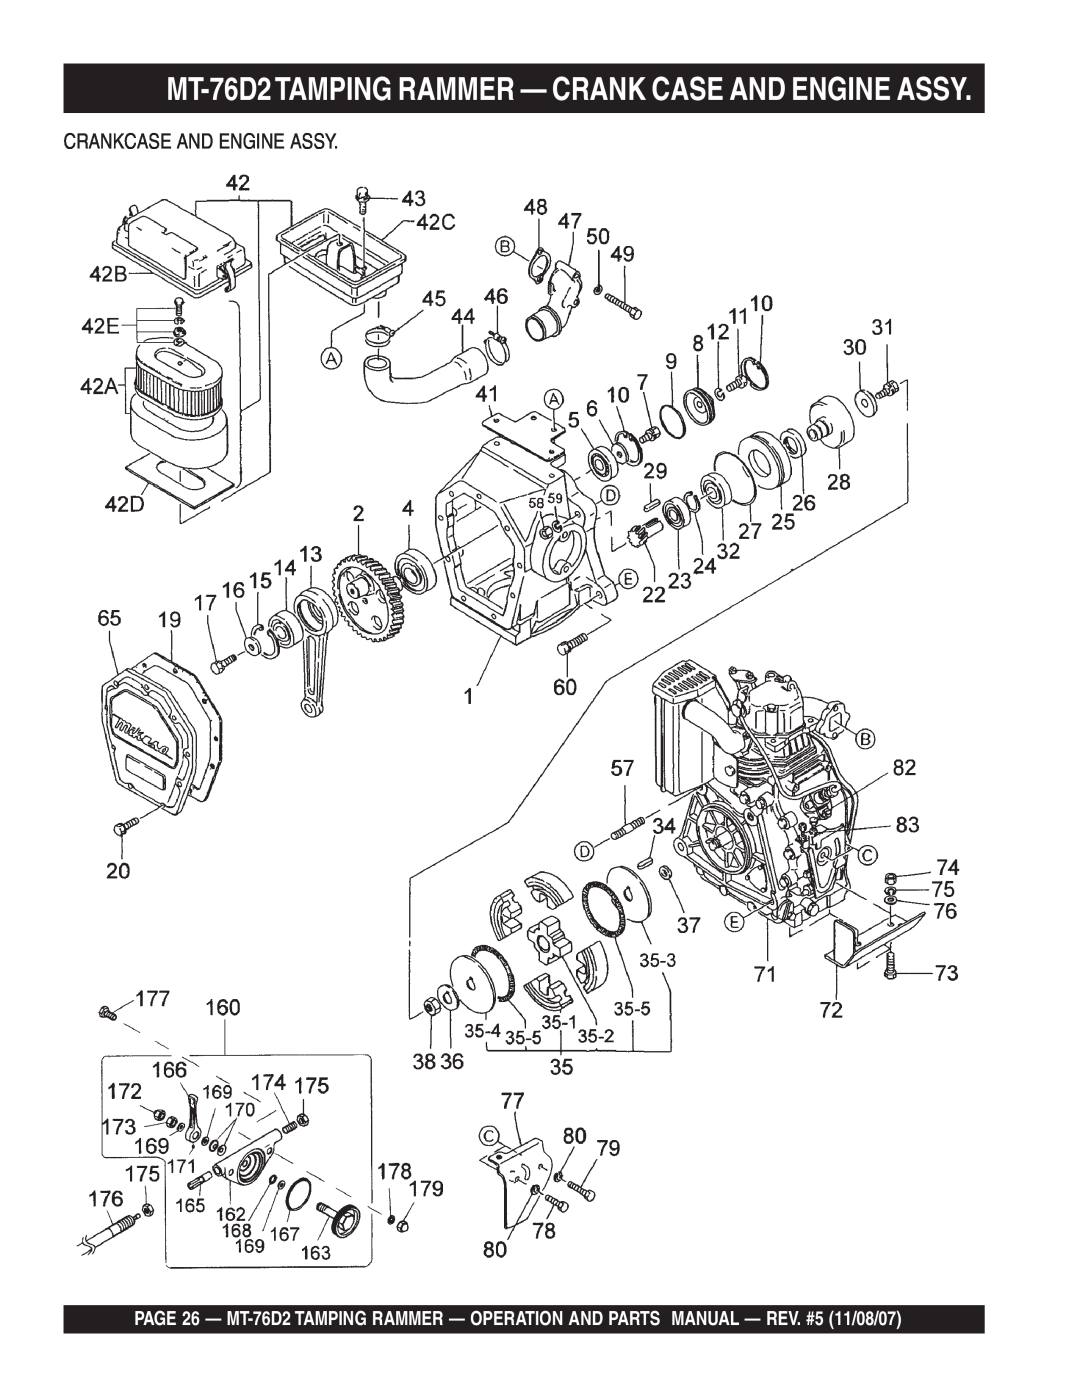 Multiquip manual MT-76D2TAMPING RAMMER - CRANK CASE AND ENGINE ASSY, Crankcase And Engine Assy 